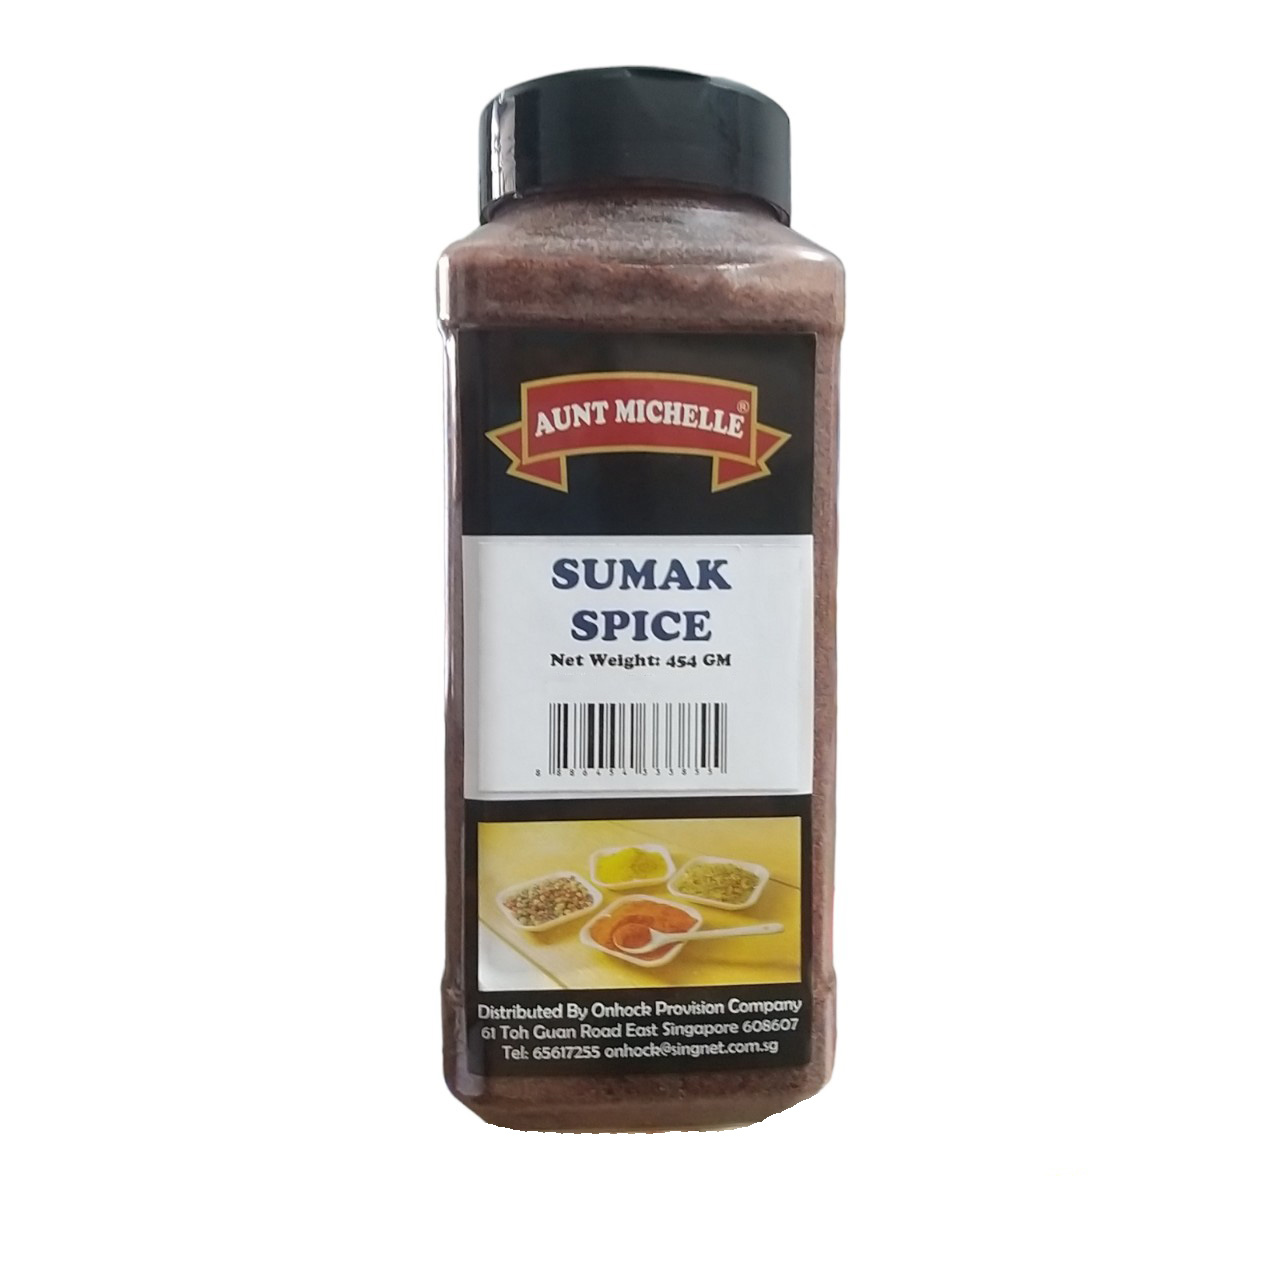 Gia vi Sumak Spice, Sumac Spice, Sumach Spice 454g